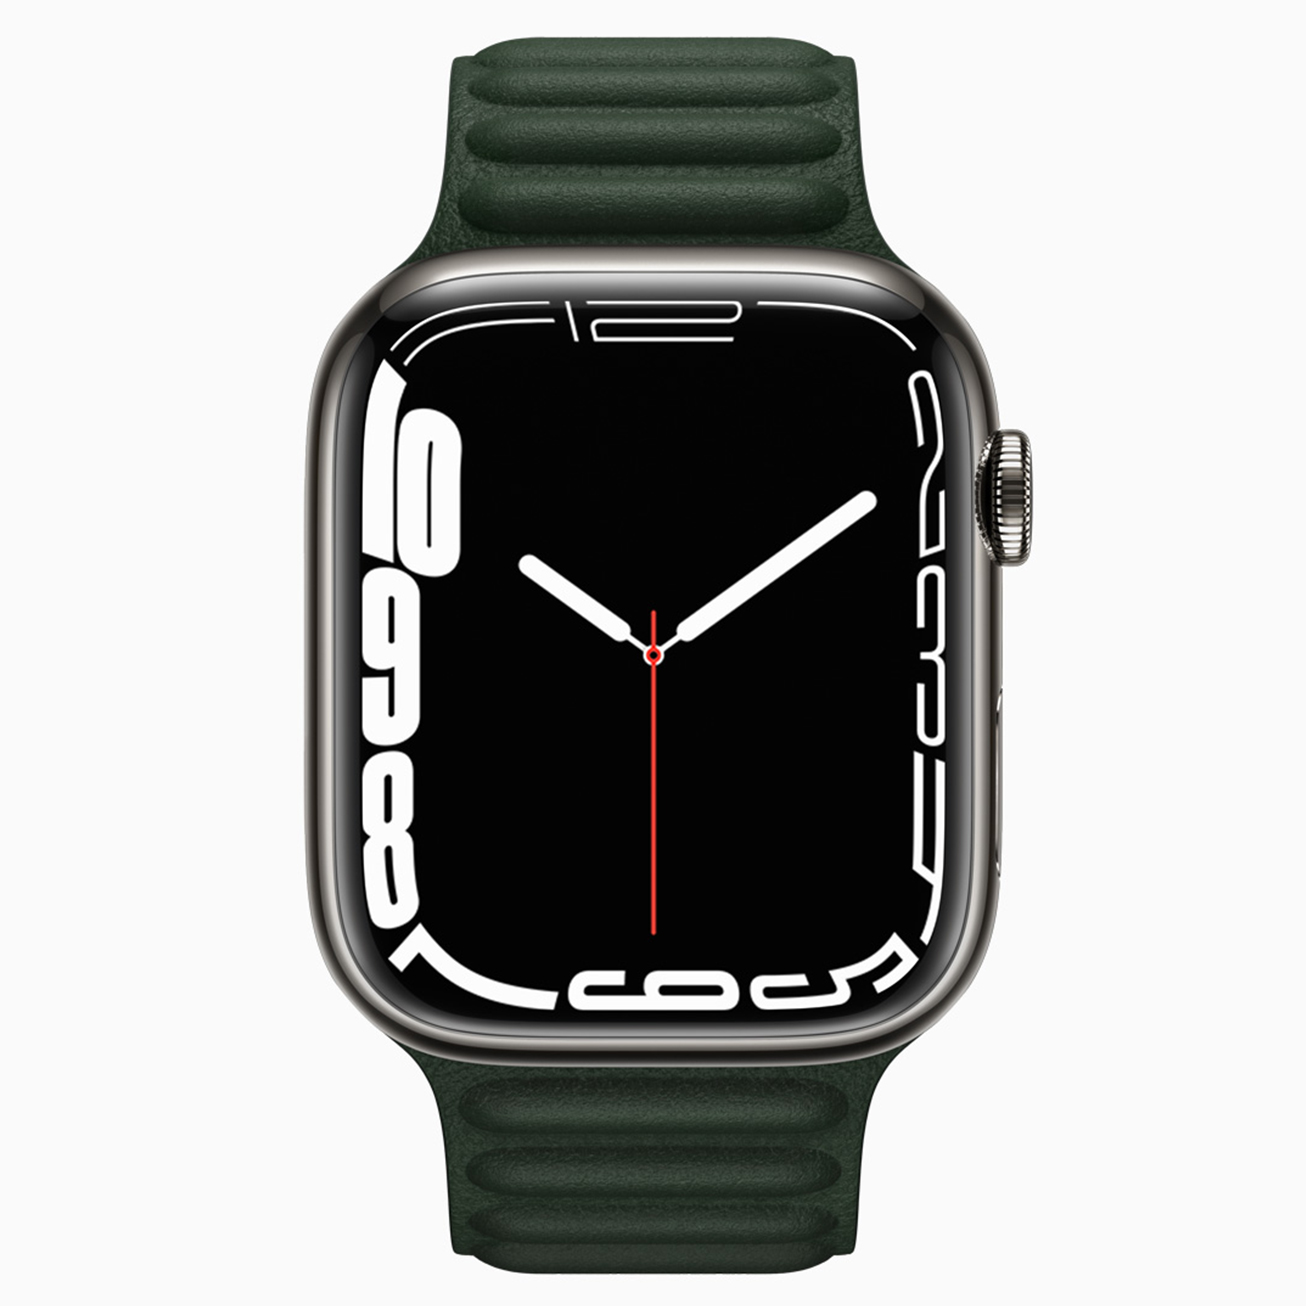 <p>Apple's new Watch Series 7</p>
